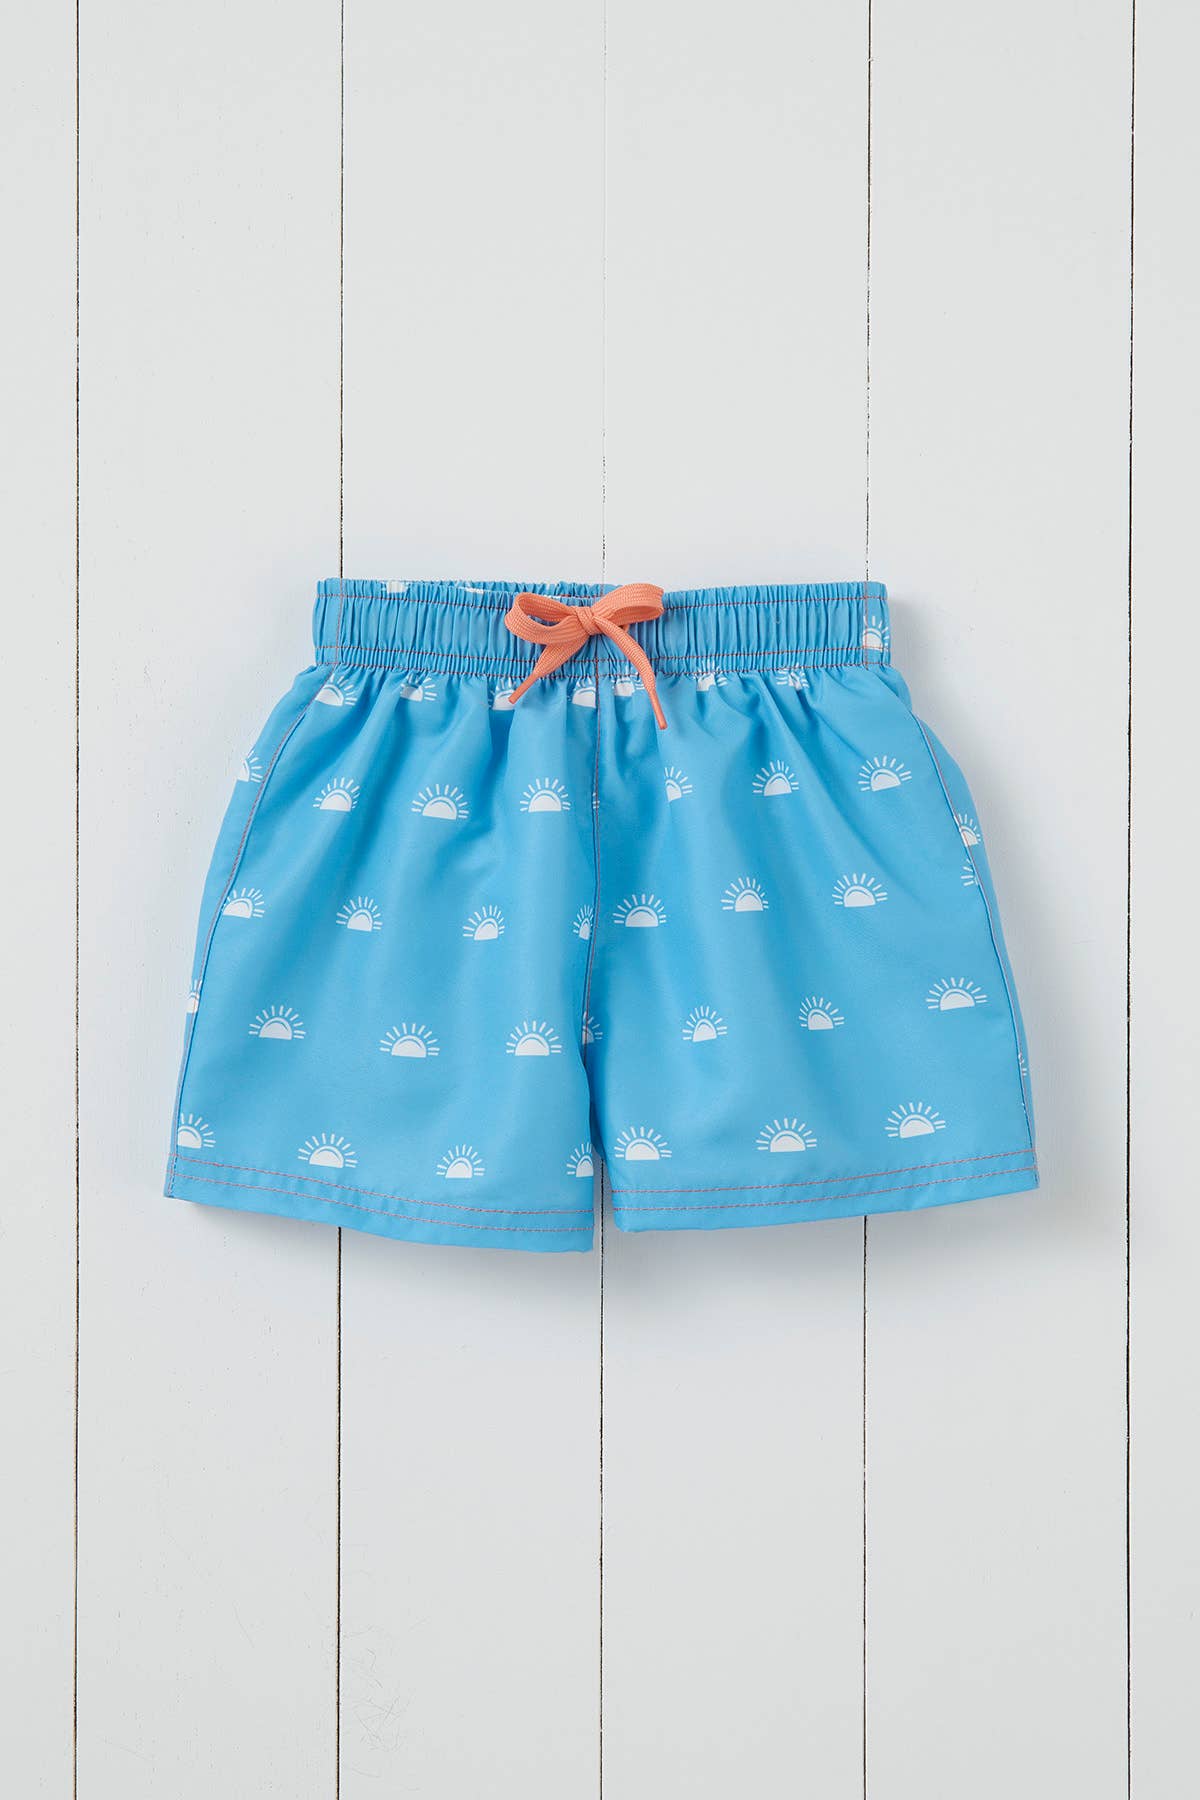 Grass & Air - Cornflower Blue Swim Shorts